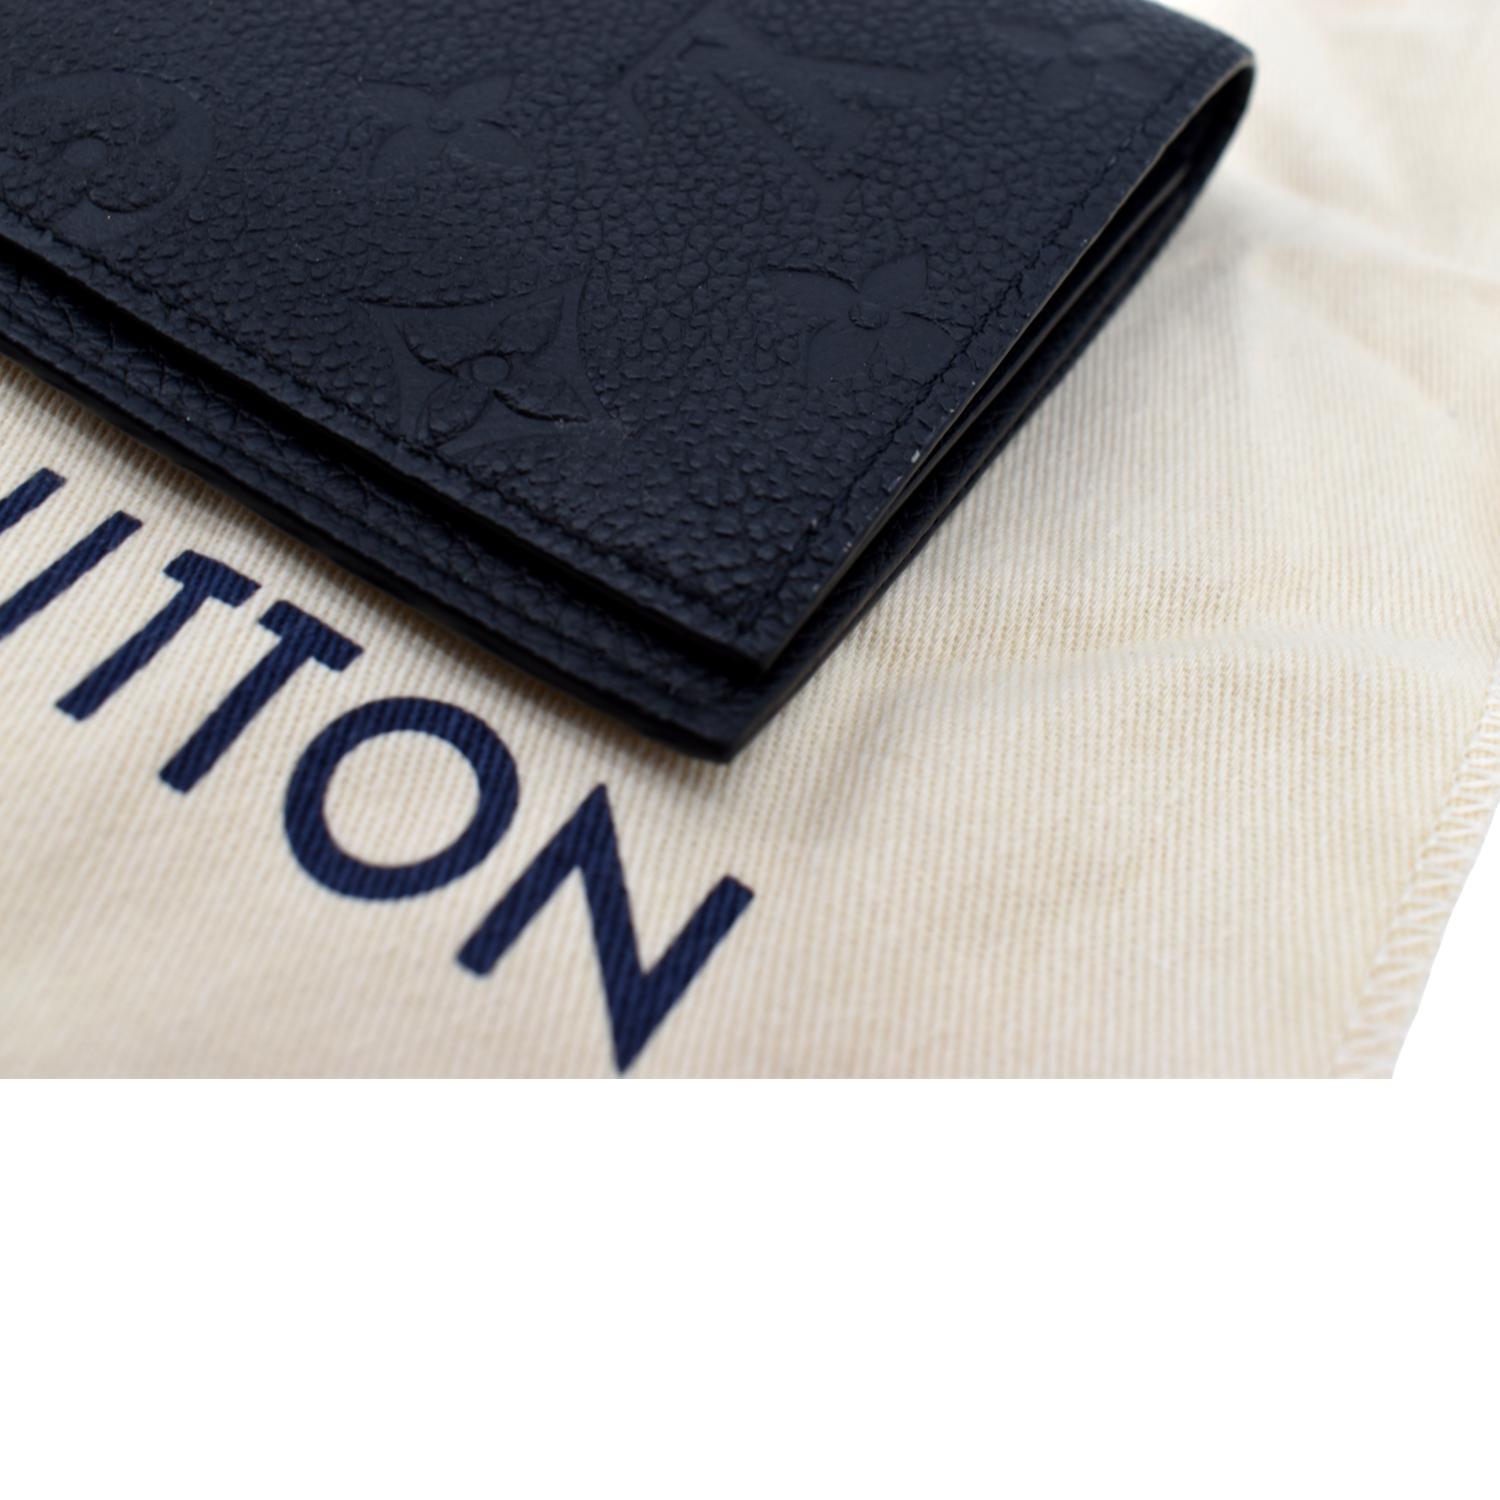 Louis Vuitton Monogram Empreinte Passport Cover